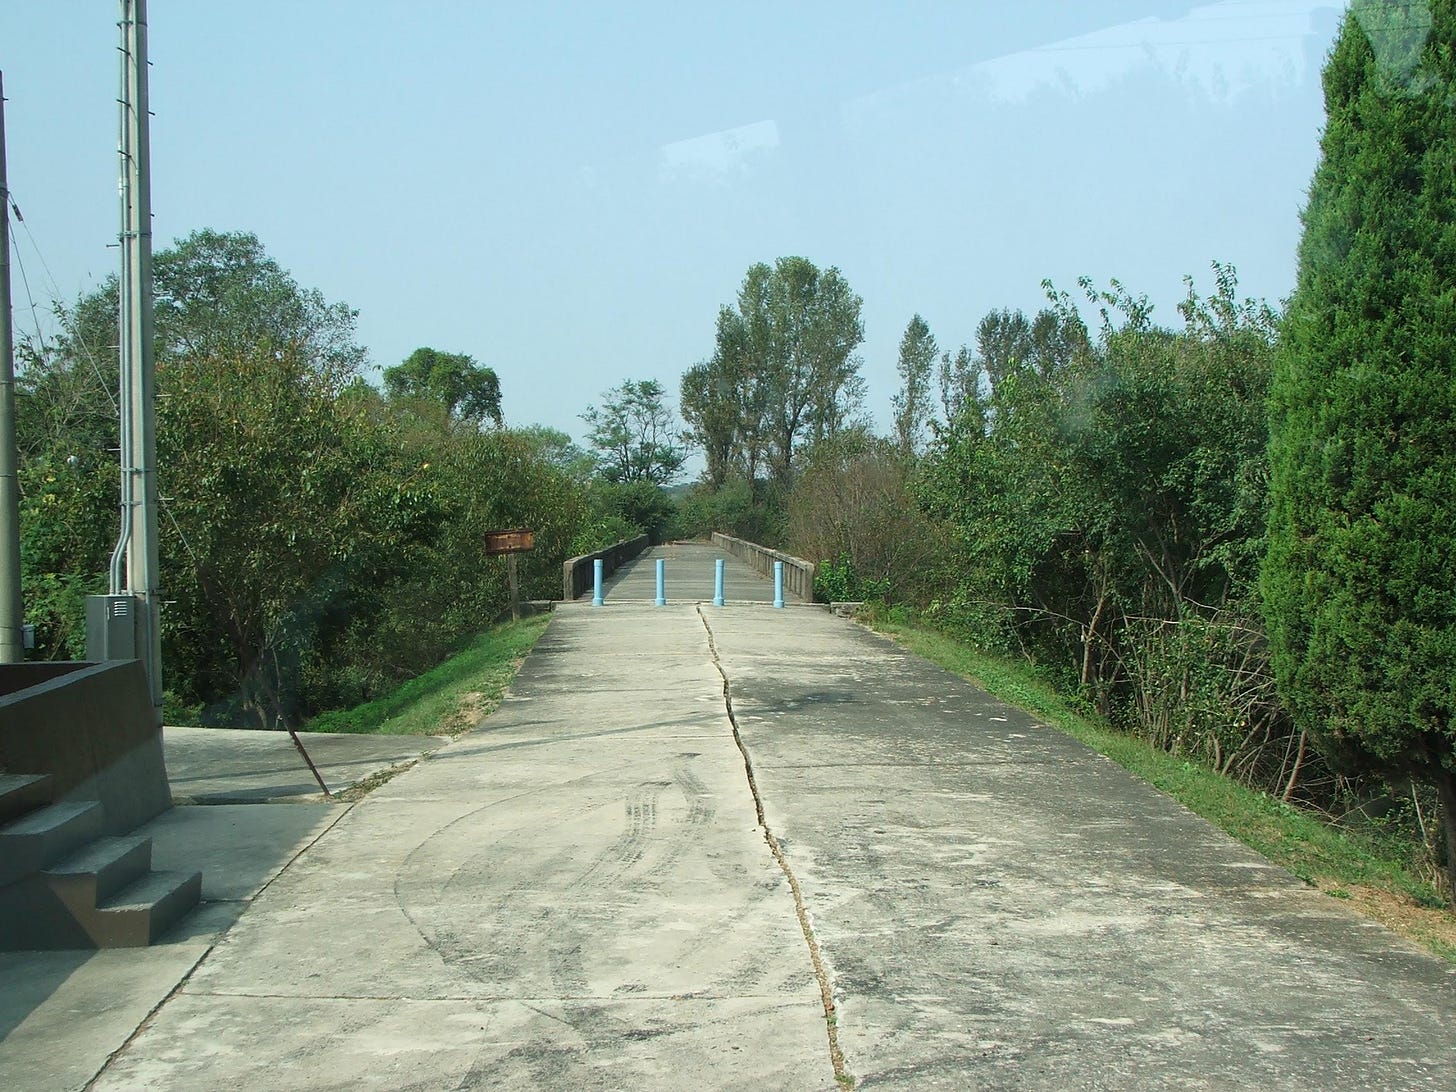 Bridge of No Return, 2006, author's photograph